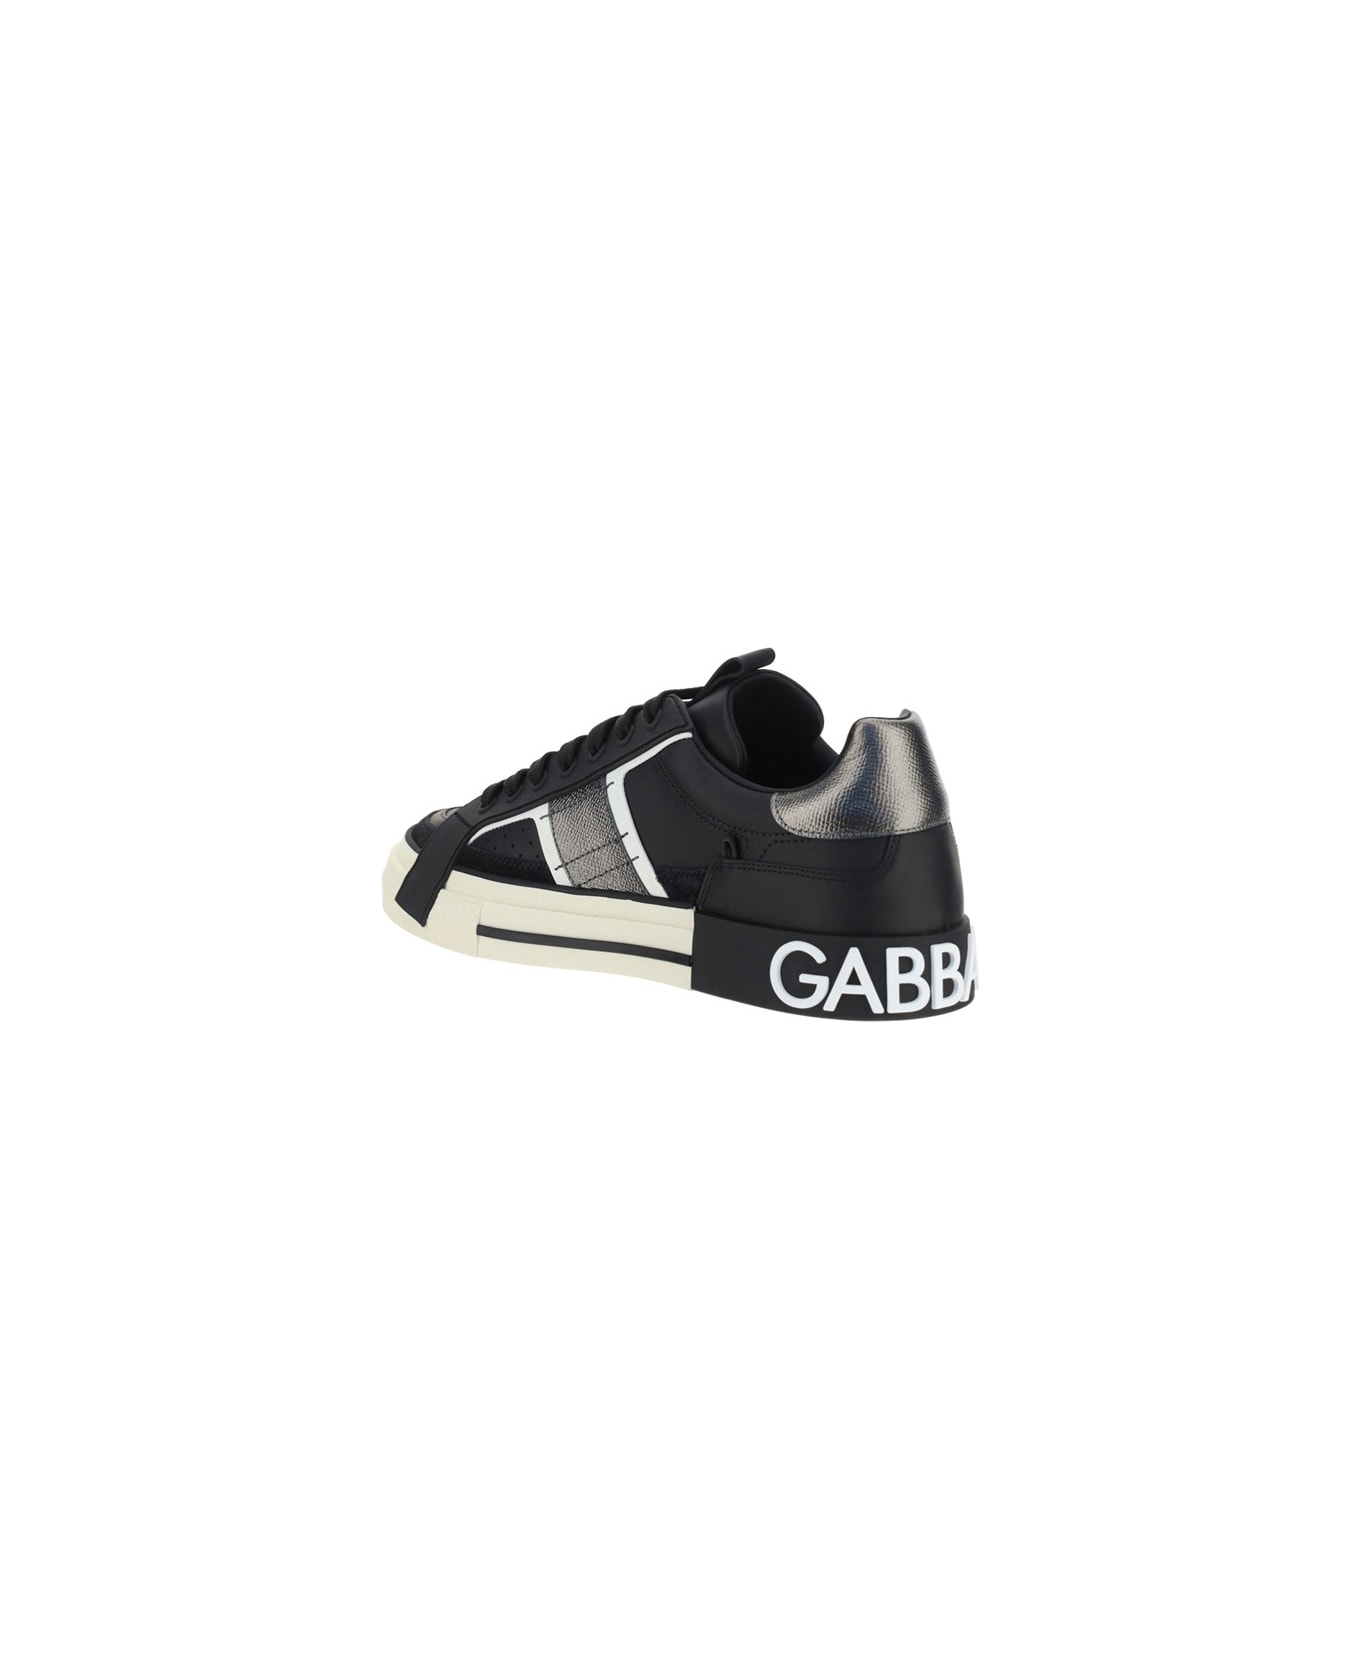 Dolce & Gabbana Custom 2.0 Sneakers - Nero/argento スニーカー